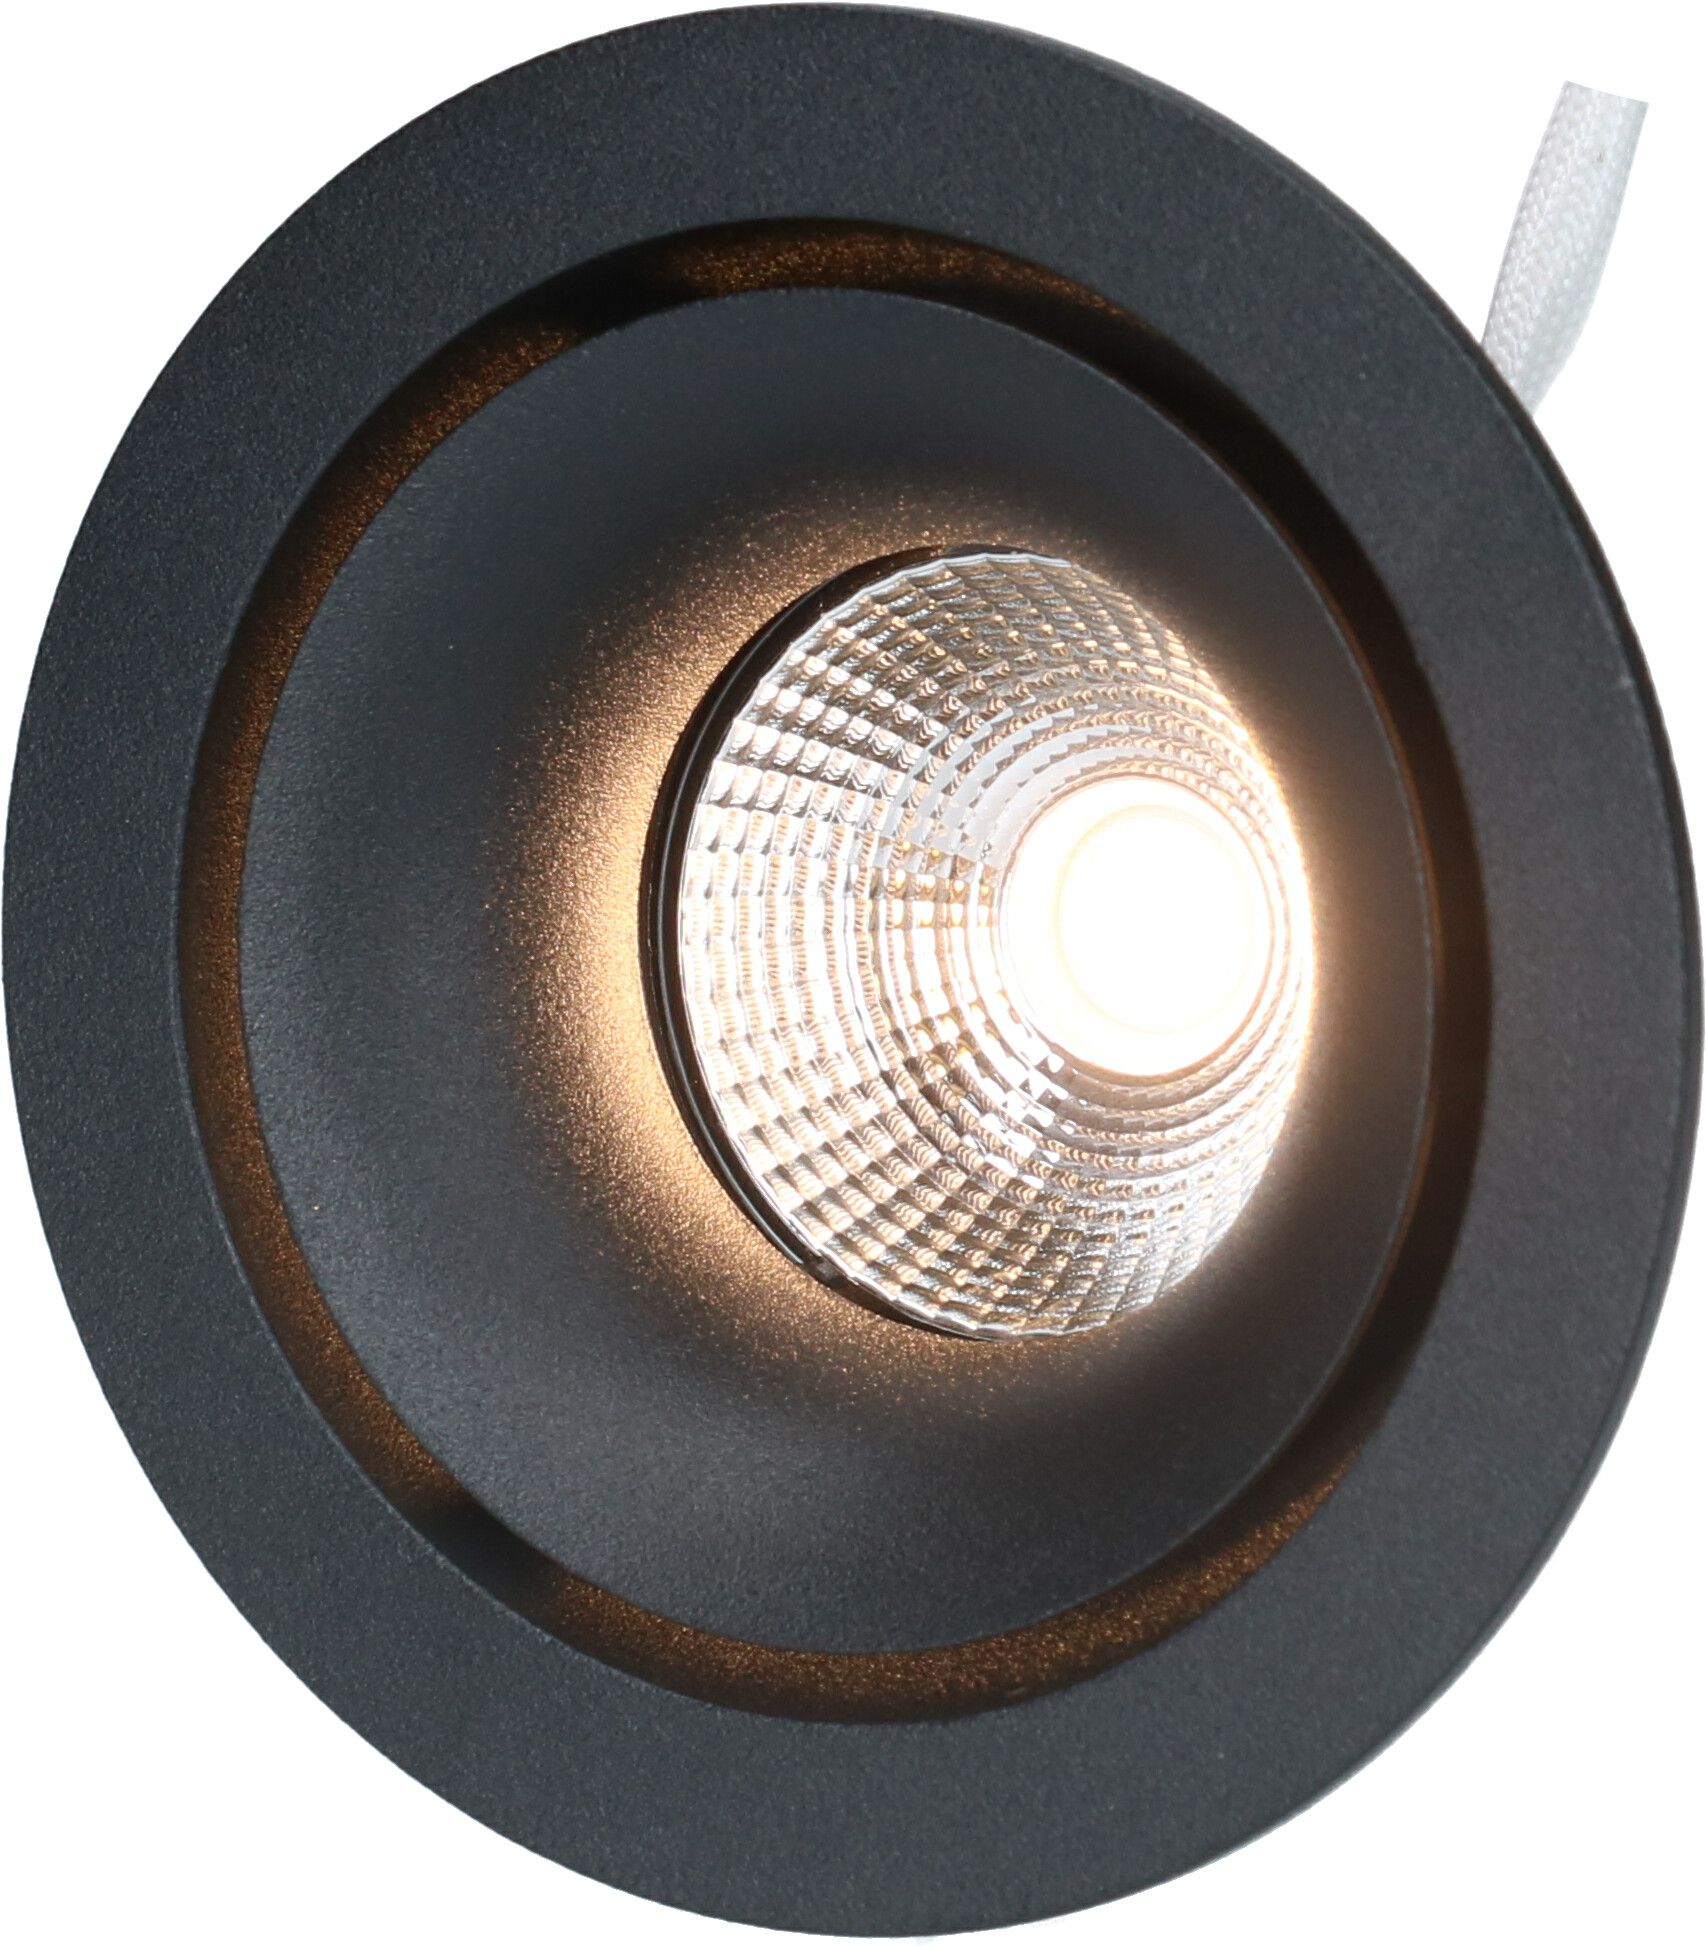 LED-Einbauspot "MOON" DALI schwarz, 3000K, 650lm, 36°